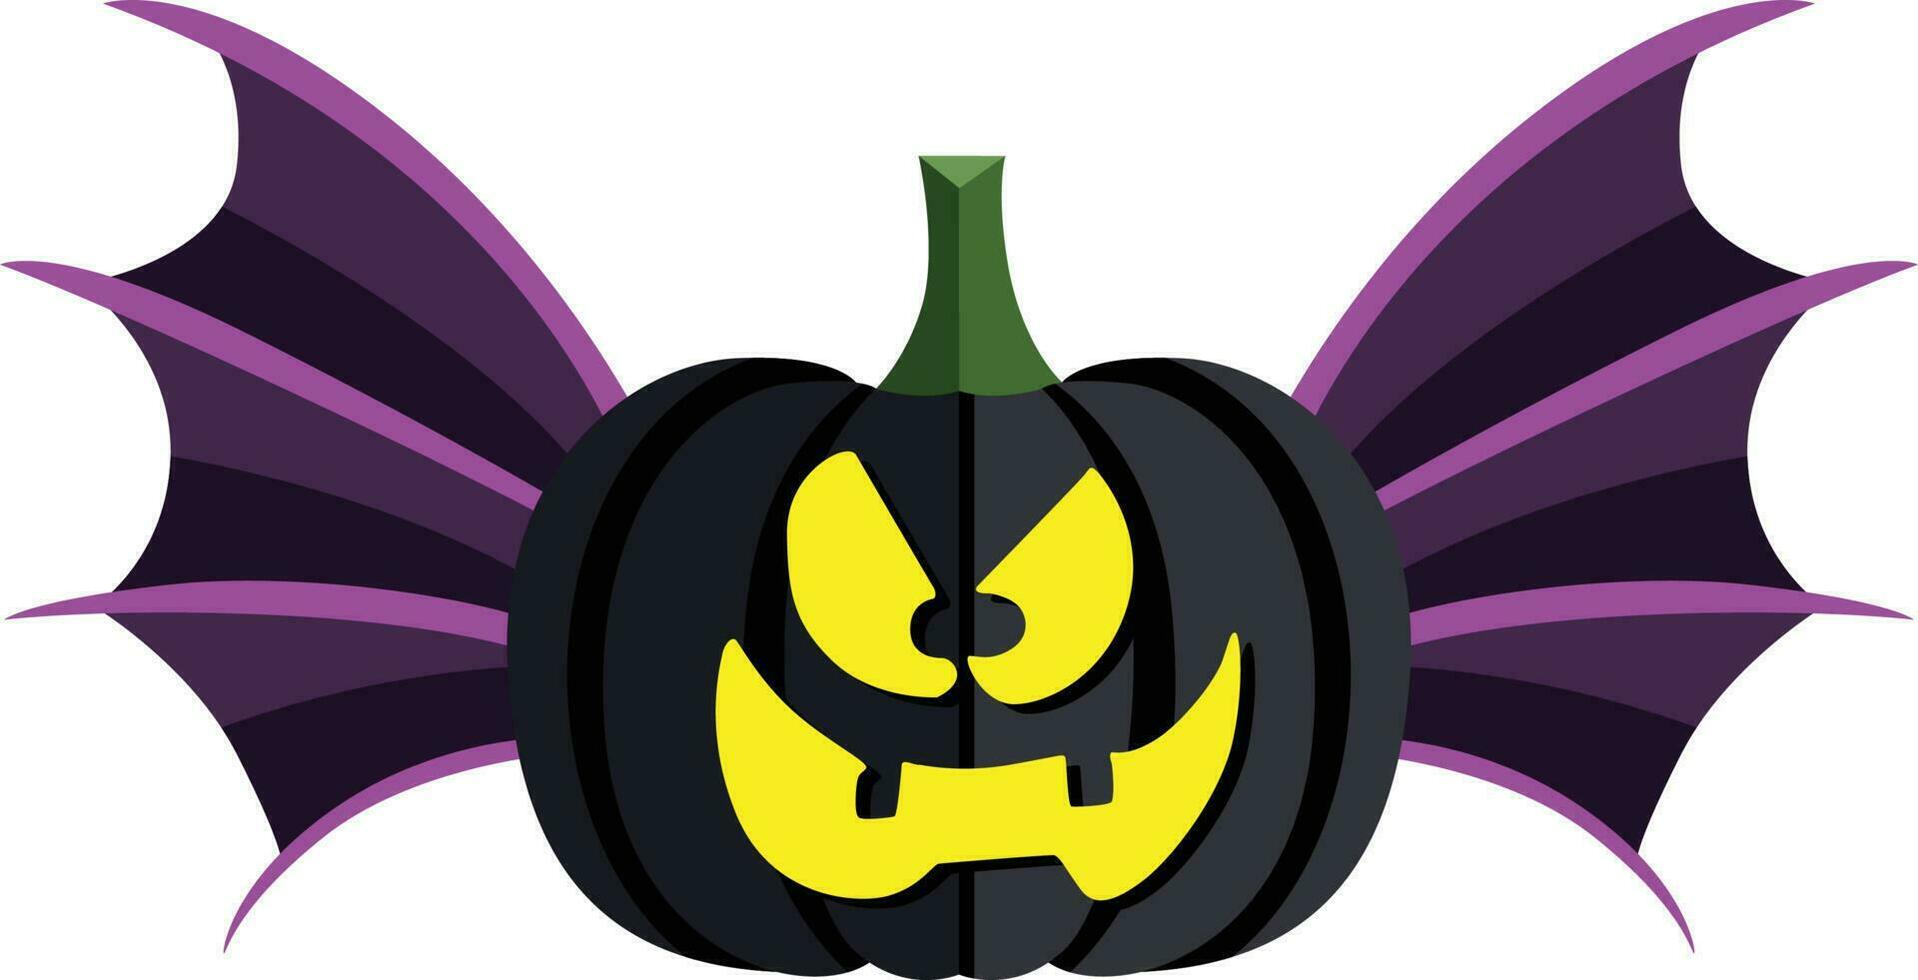 Scary halloween black pumpkin with bat wings vector